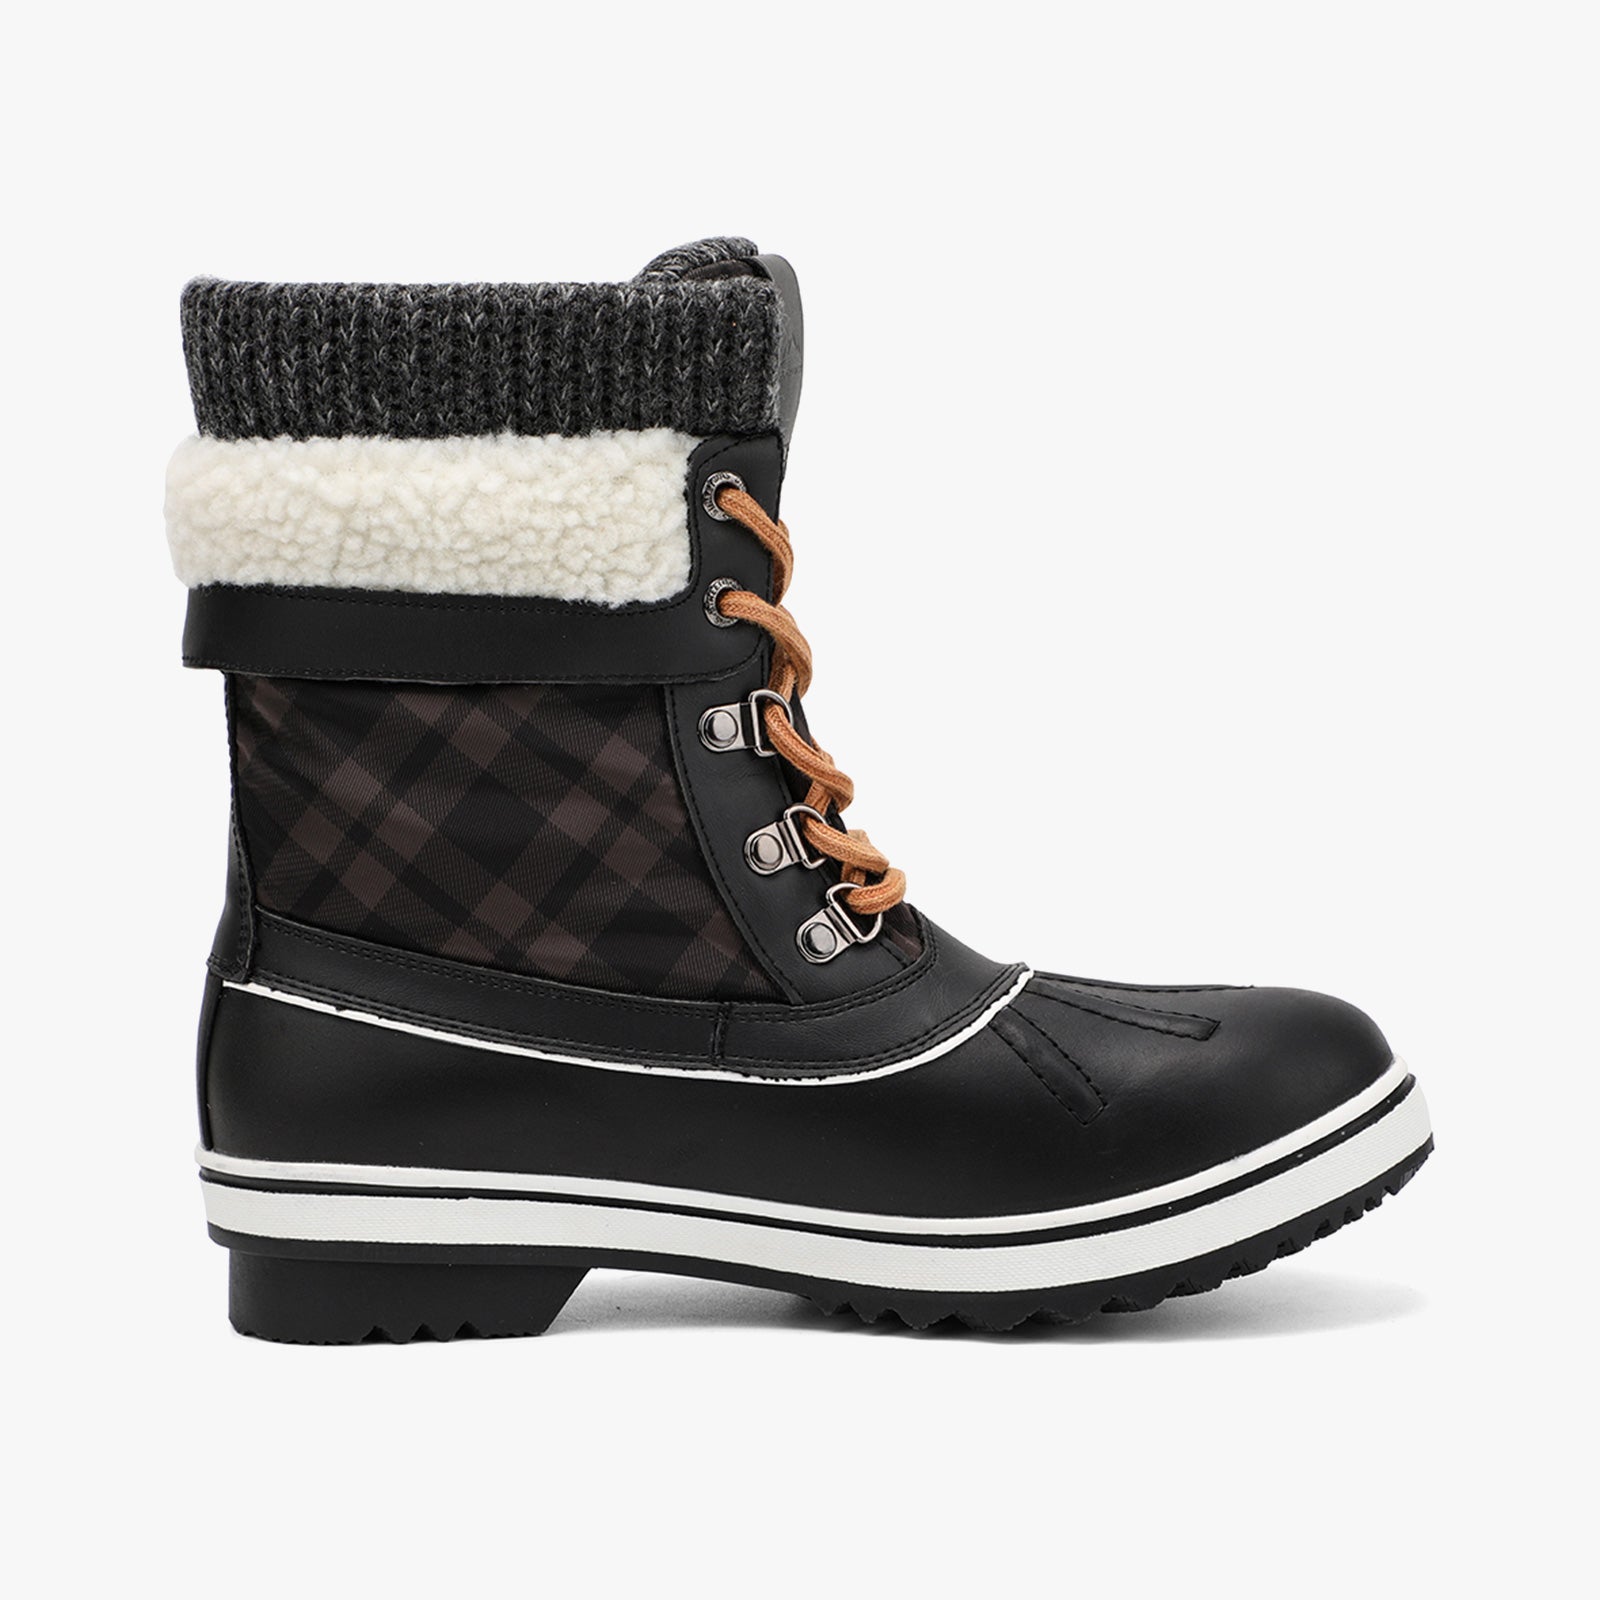 Women’s Fashion Waterproof Winter Snow Boots - Black/MC 1